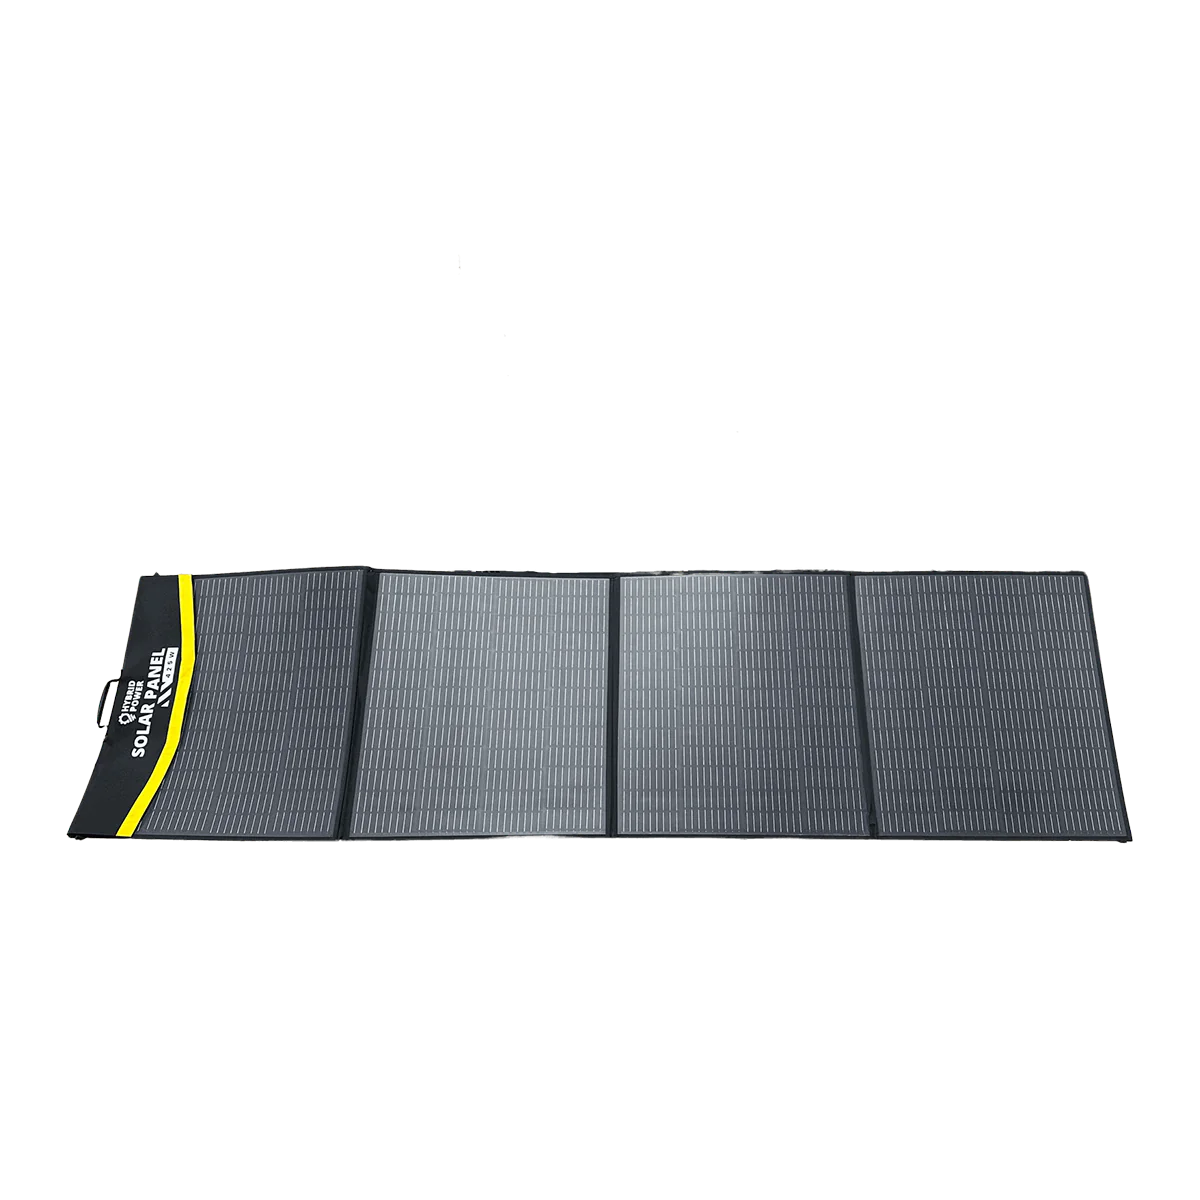 Hybrid Power Systems Batt Pack Hybrid Power 425 Watt Folding Solar Panel